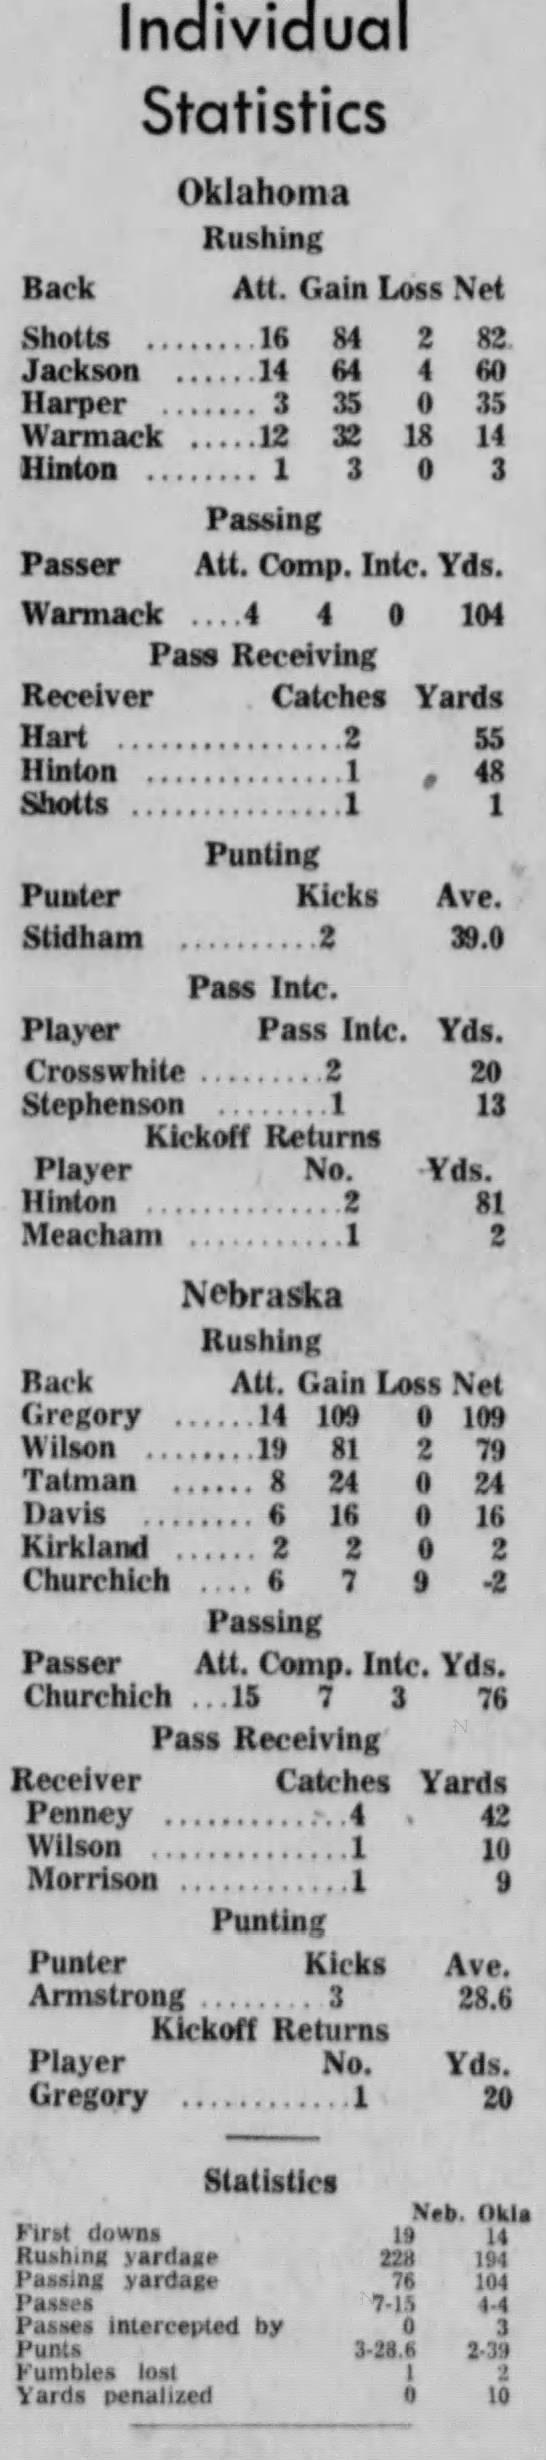 1966 Nebraska-Oklahoma individual stats - 